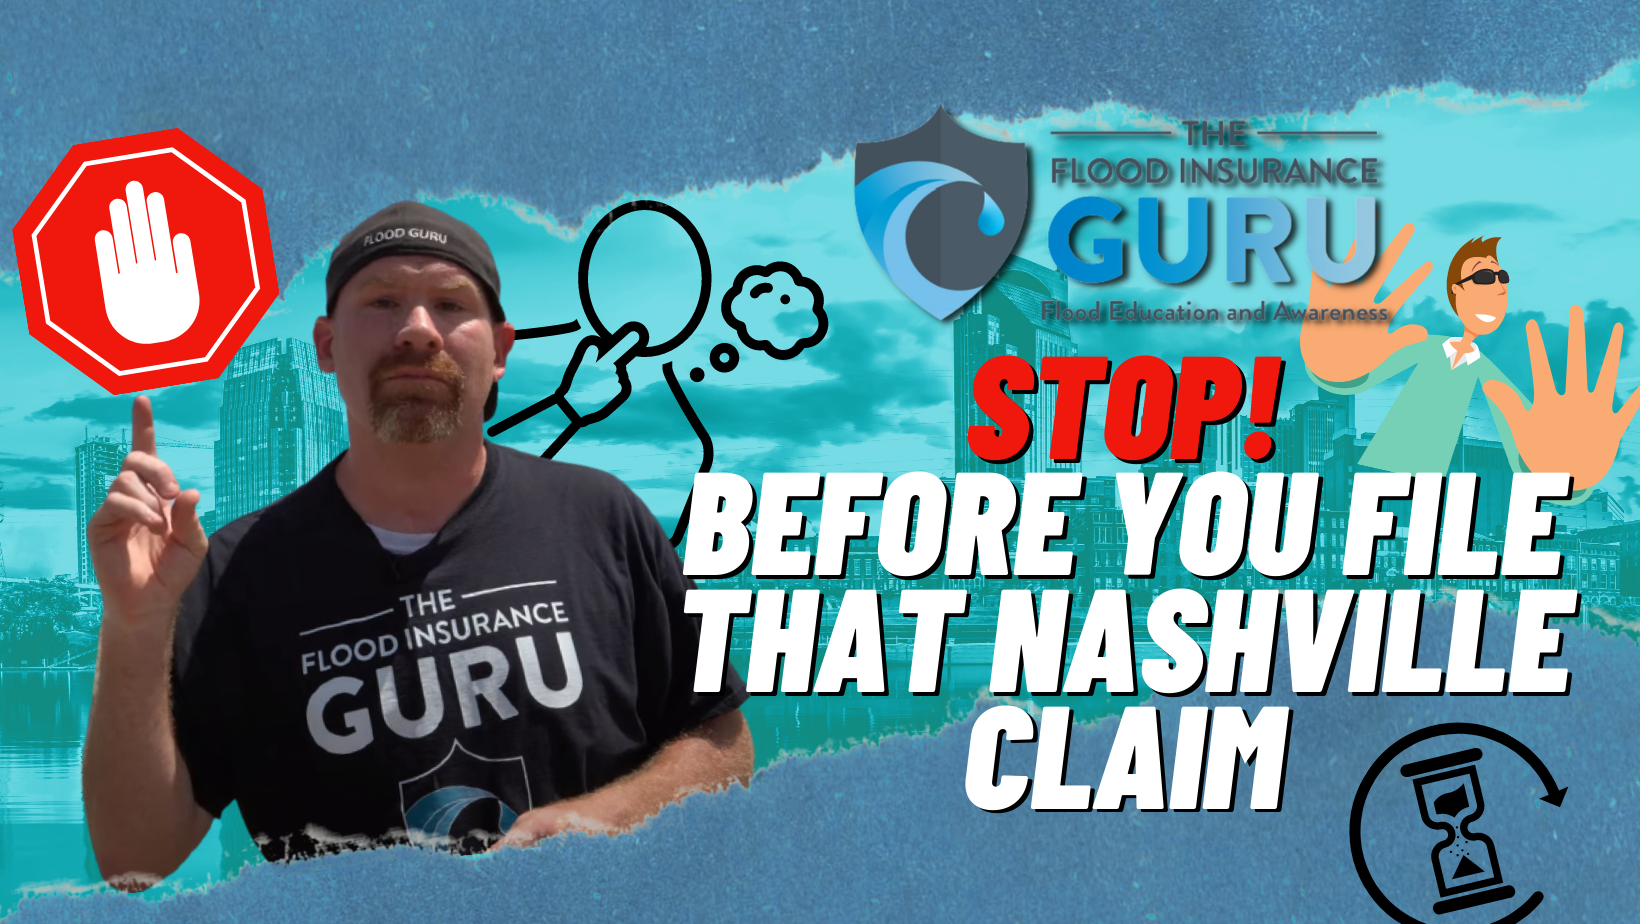 The Flood Insurance Guru | Nashville Flood